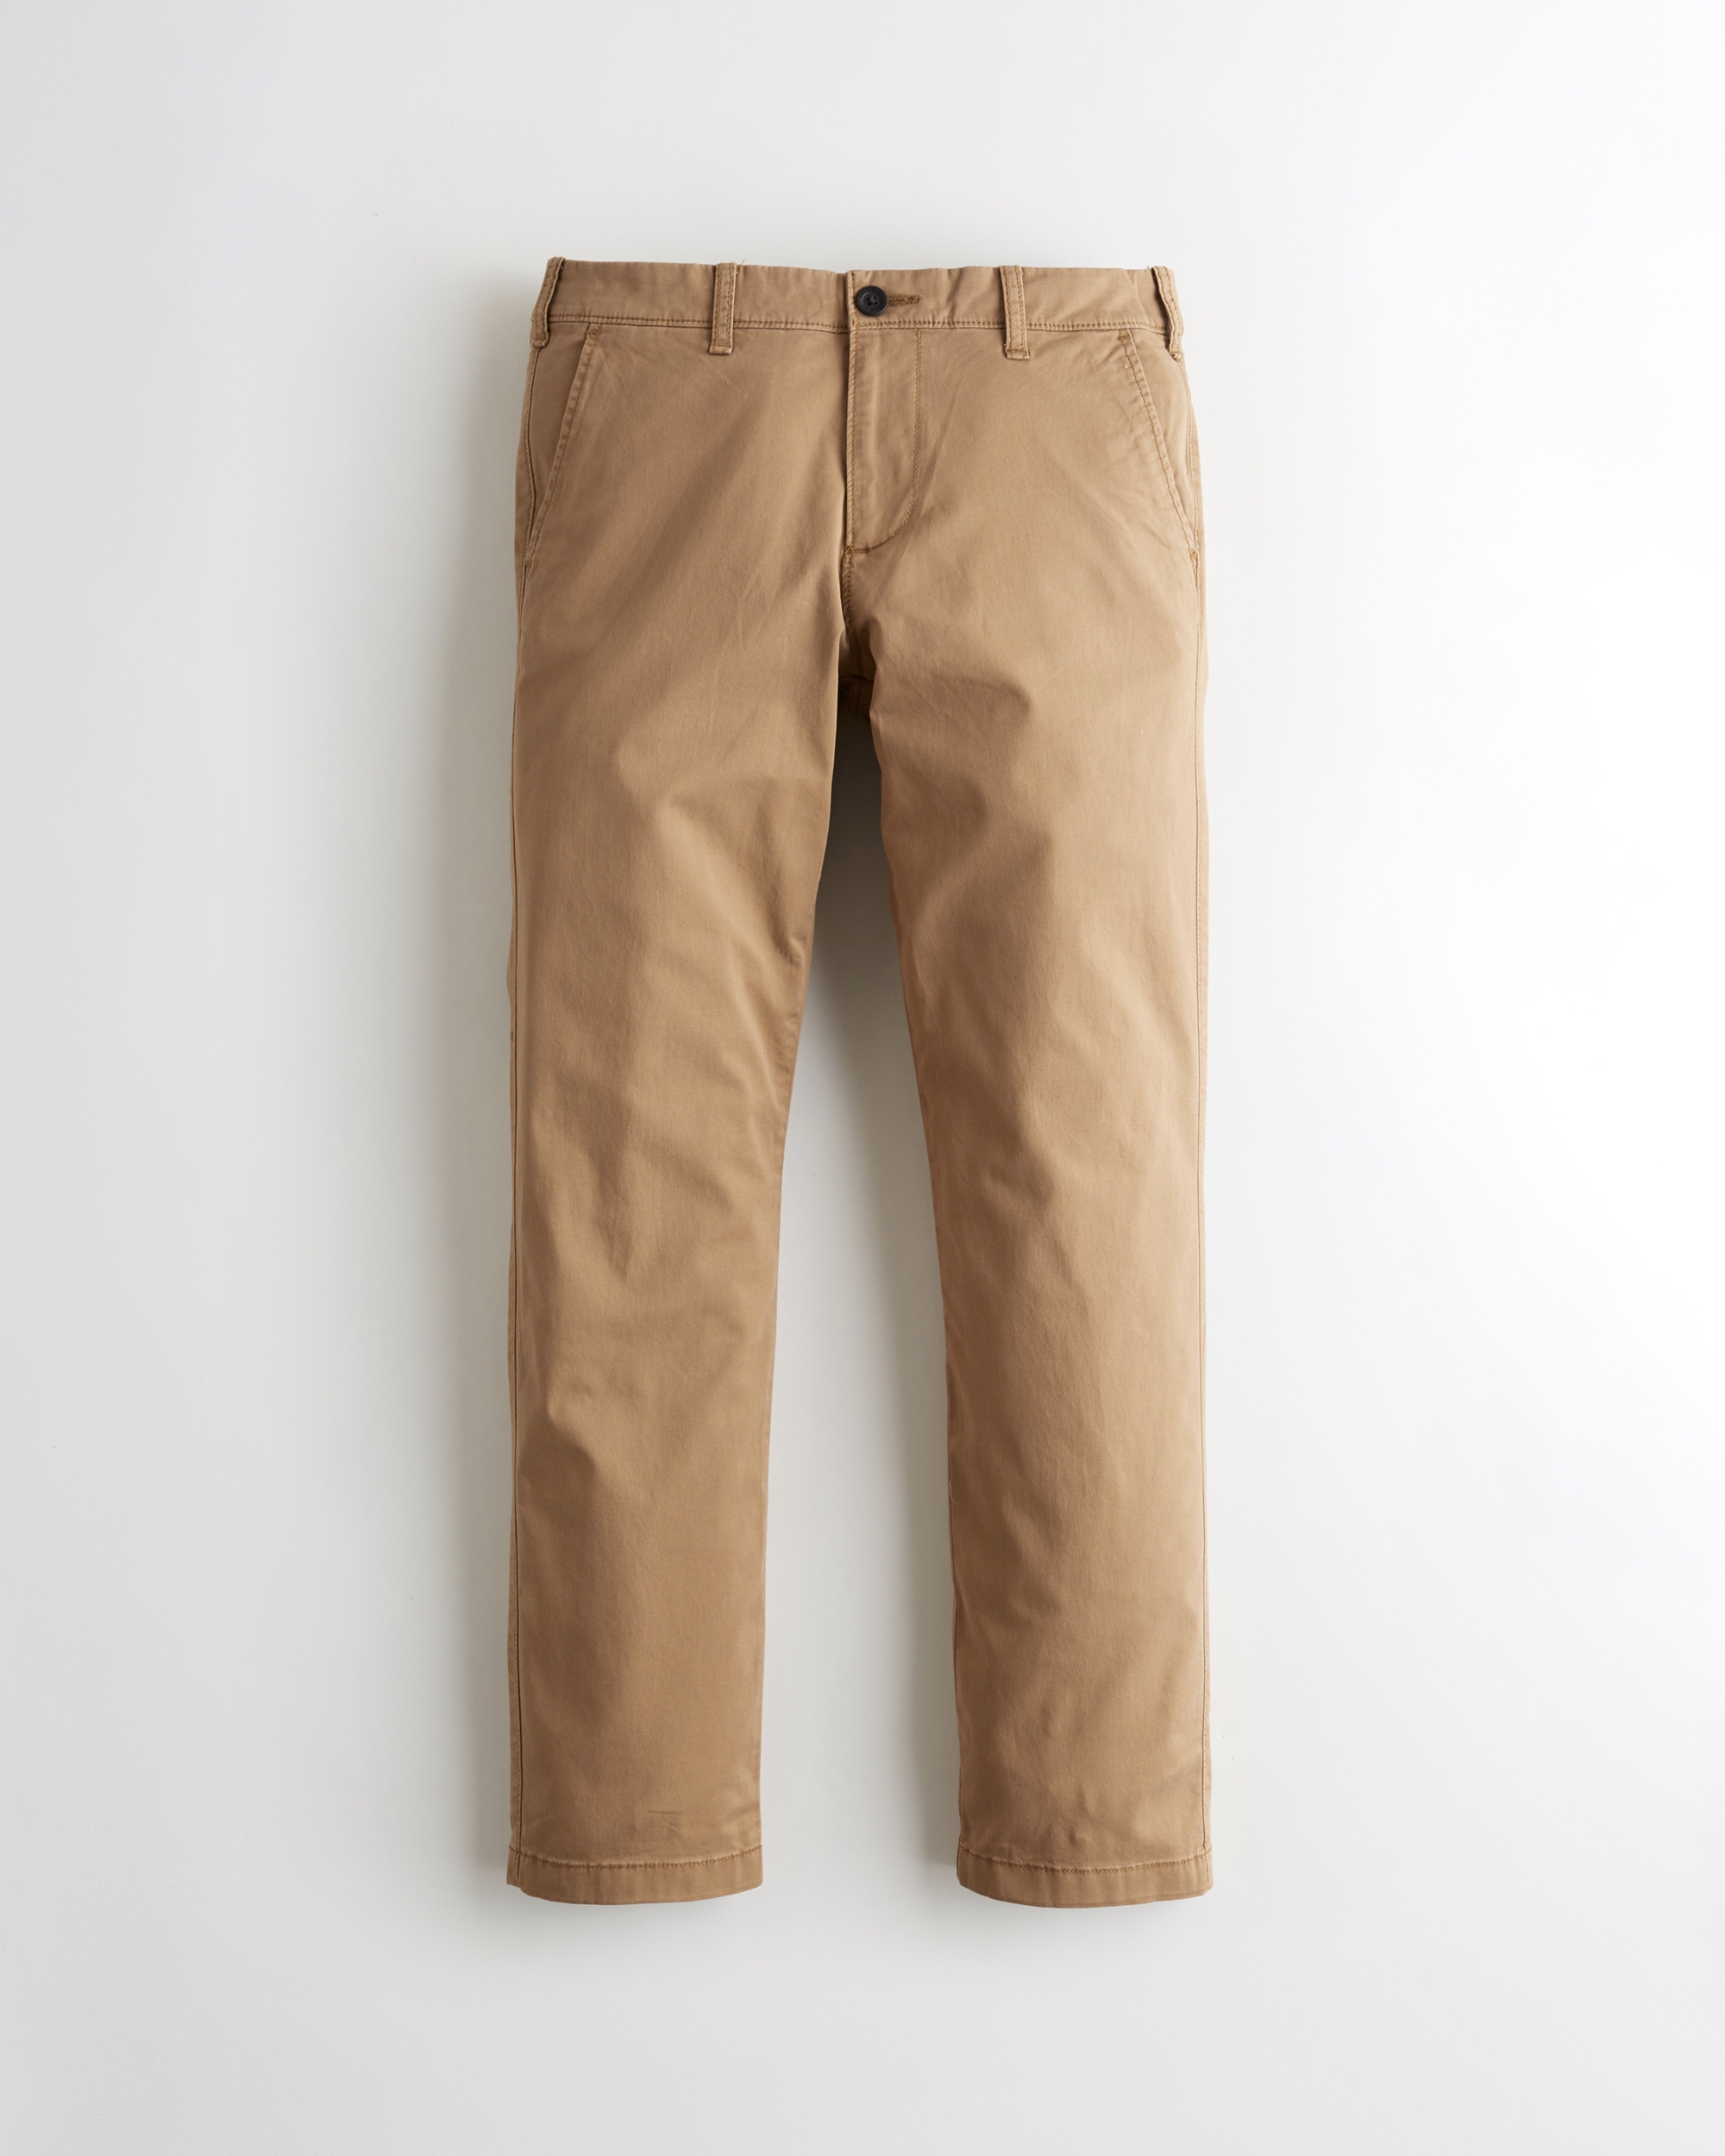 hollister pants for boys